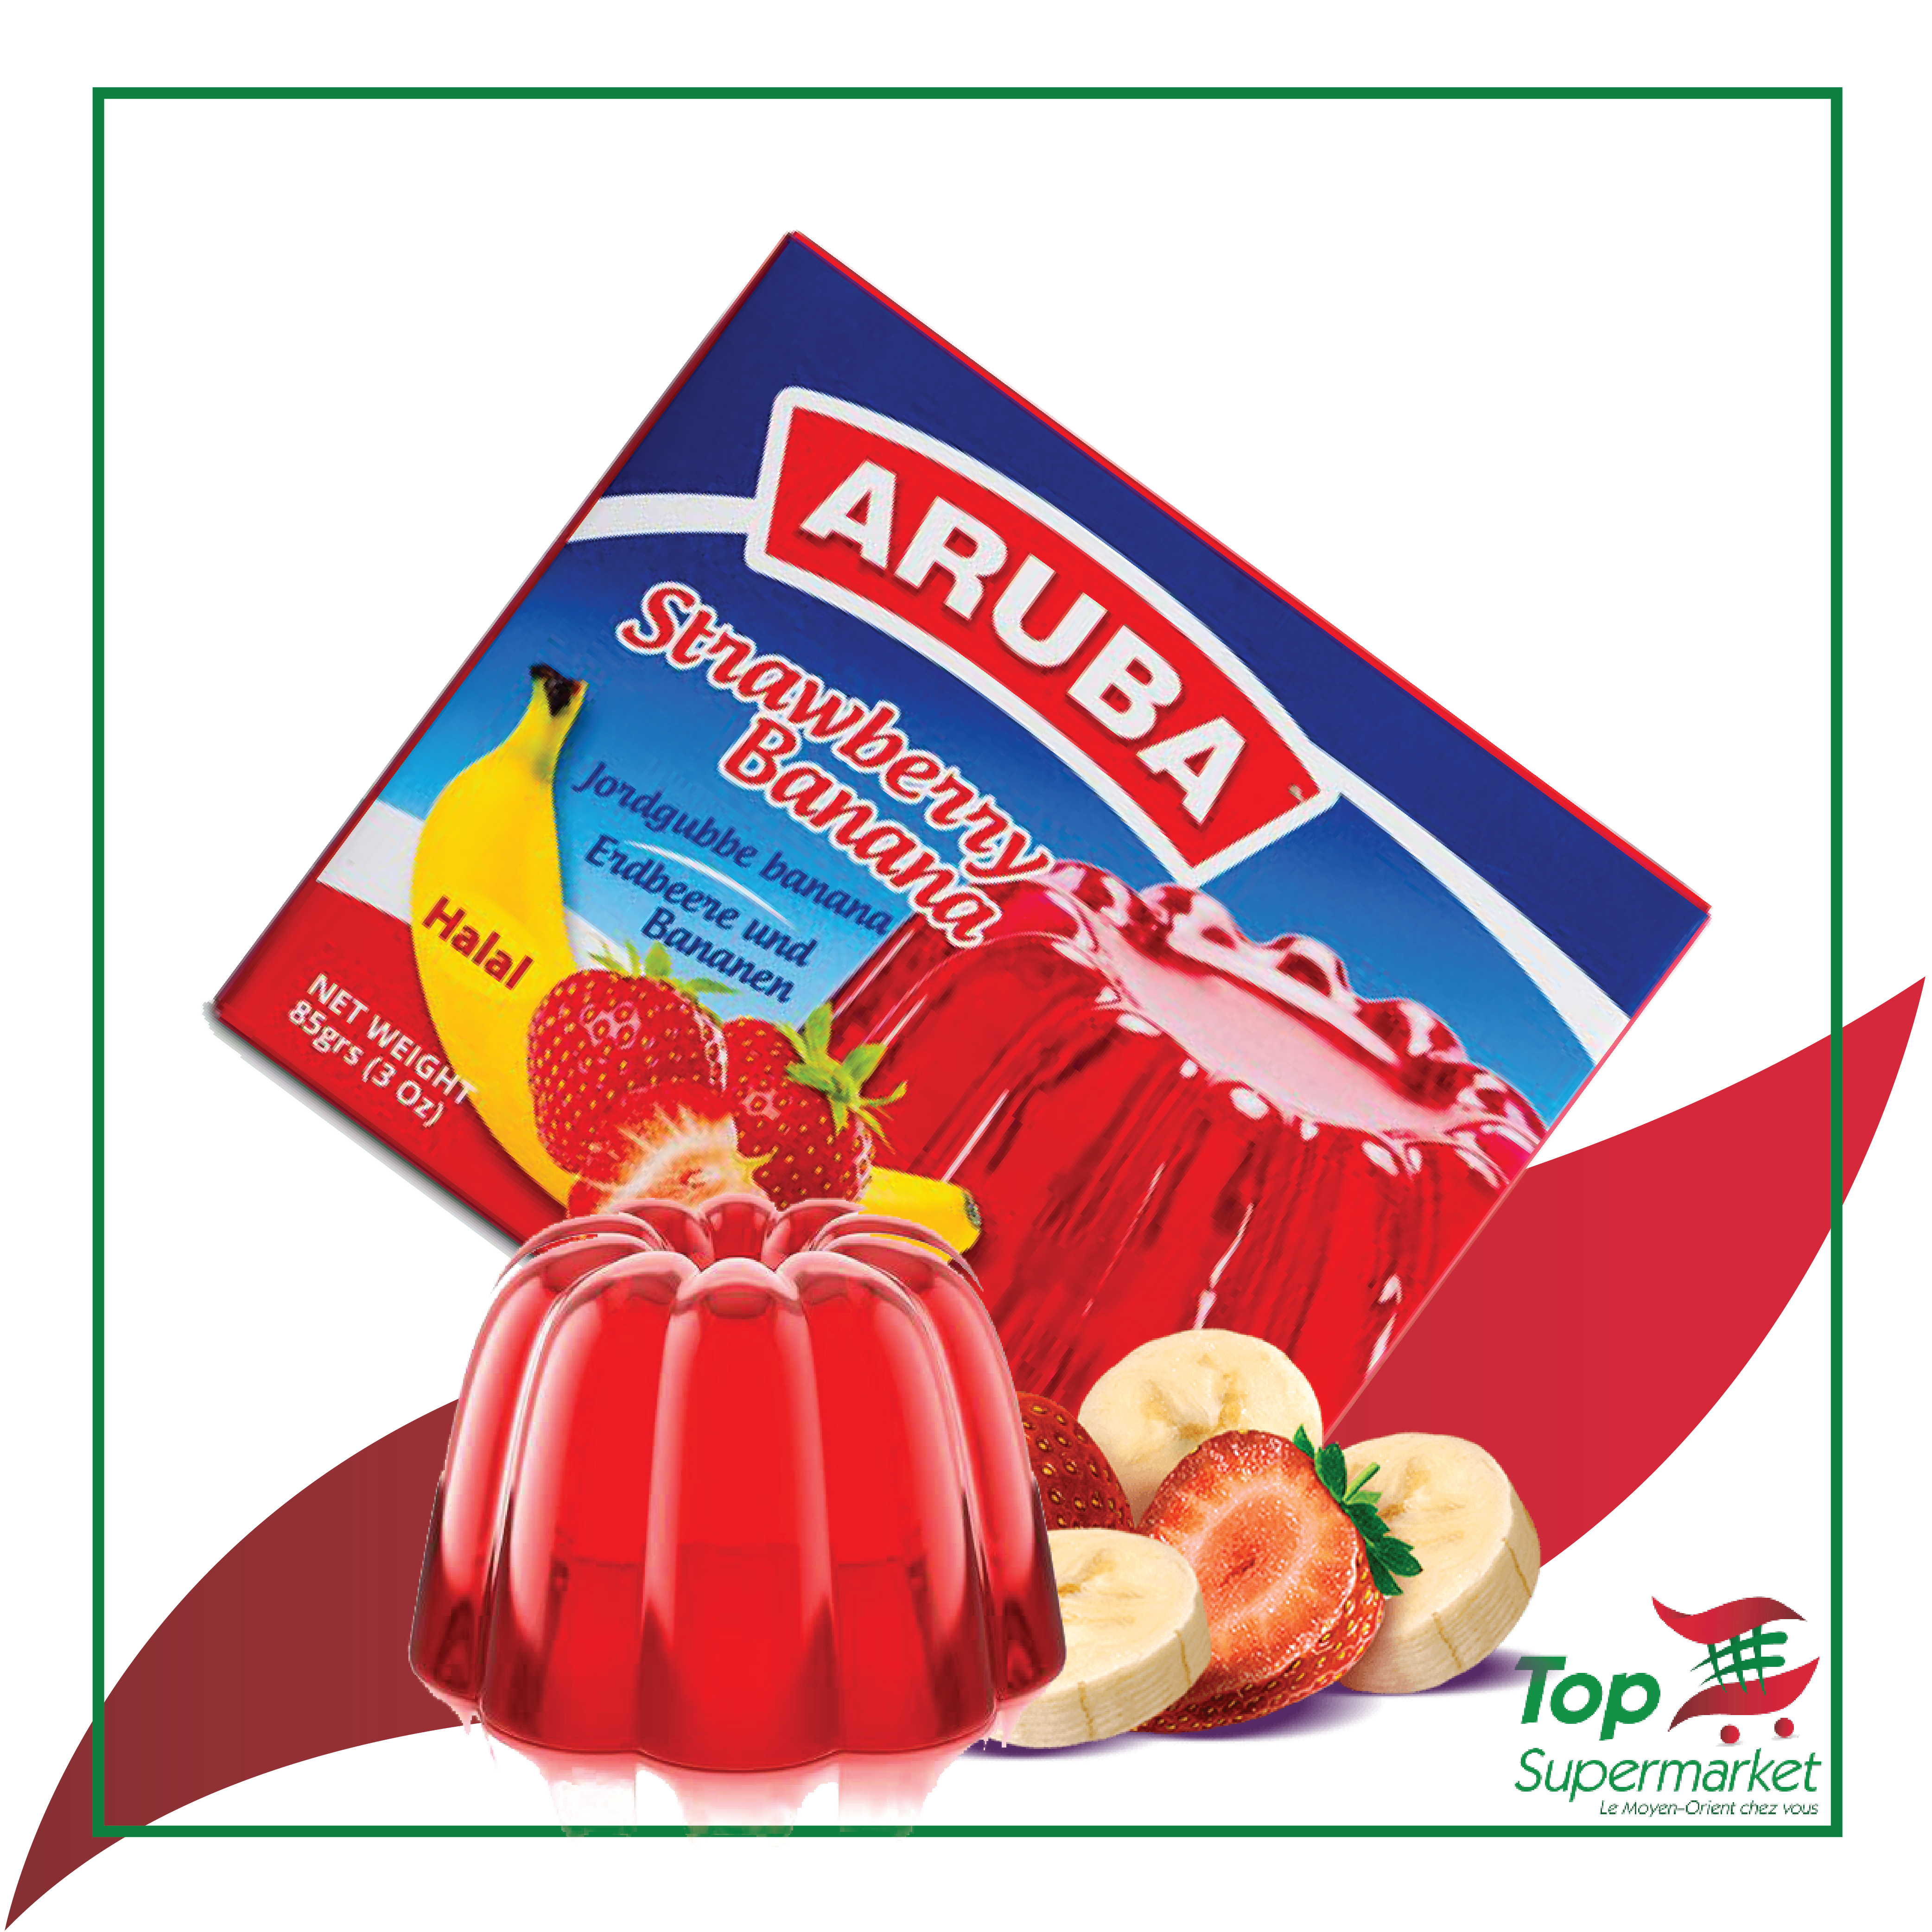 Aruba Jelly fraise & banane 85gr HALAL